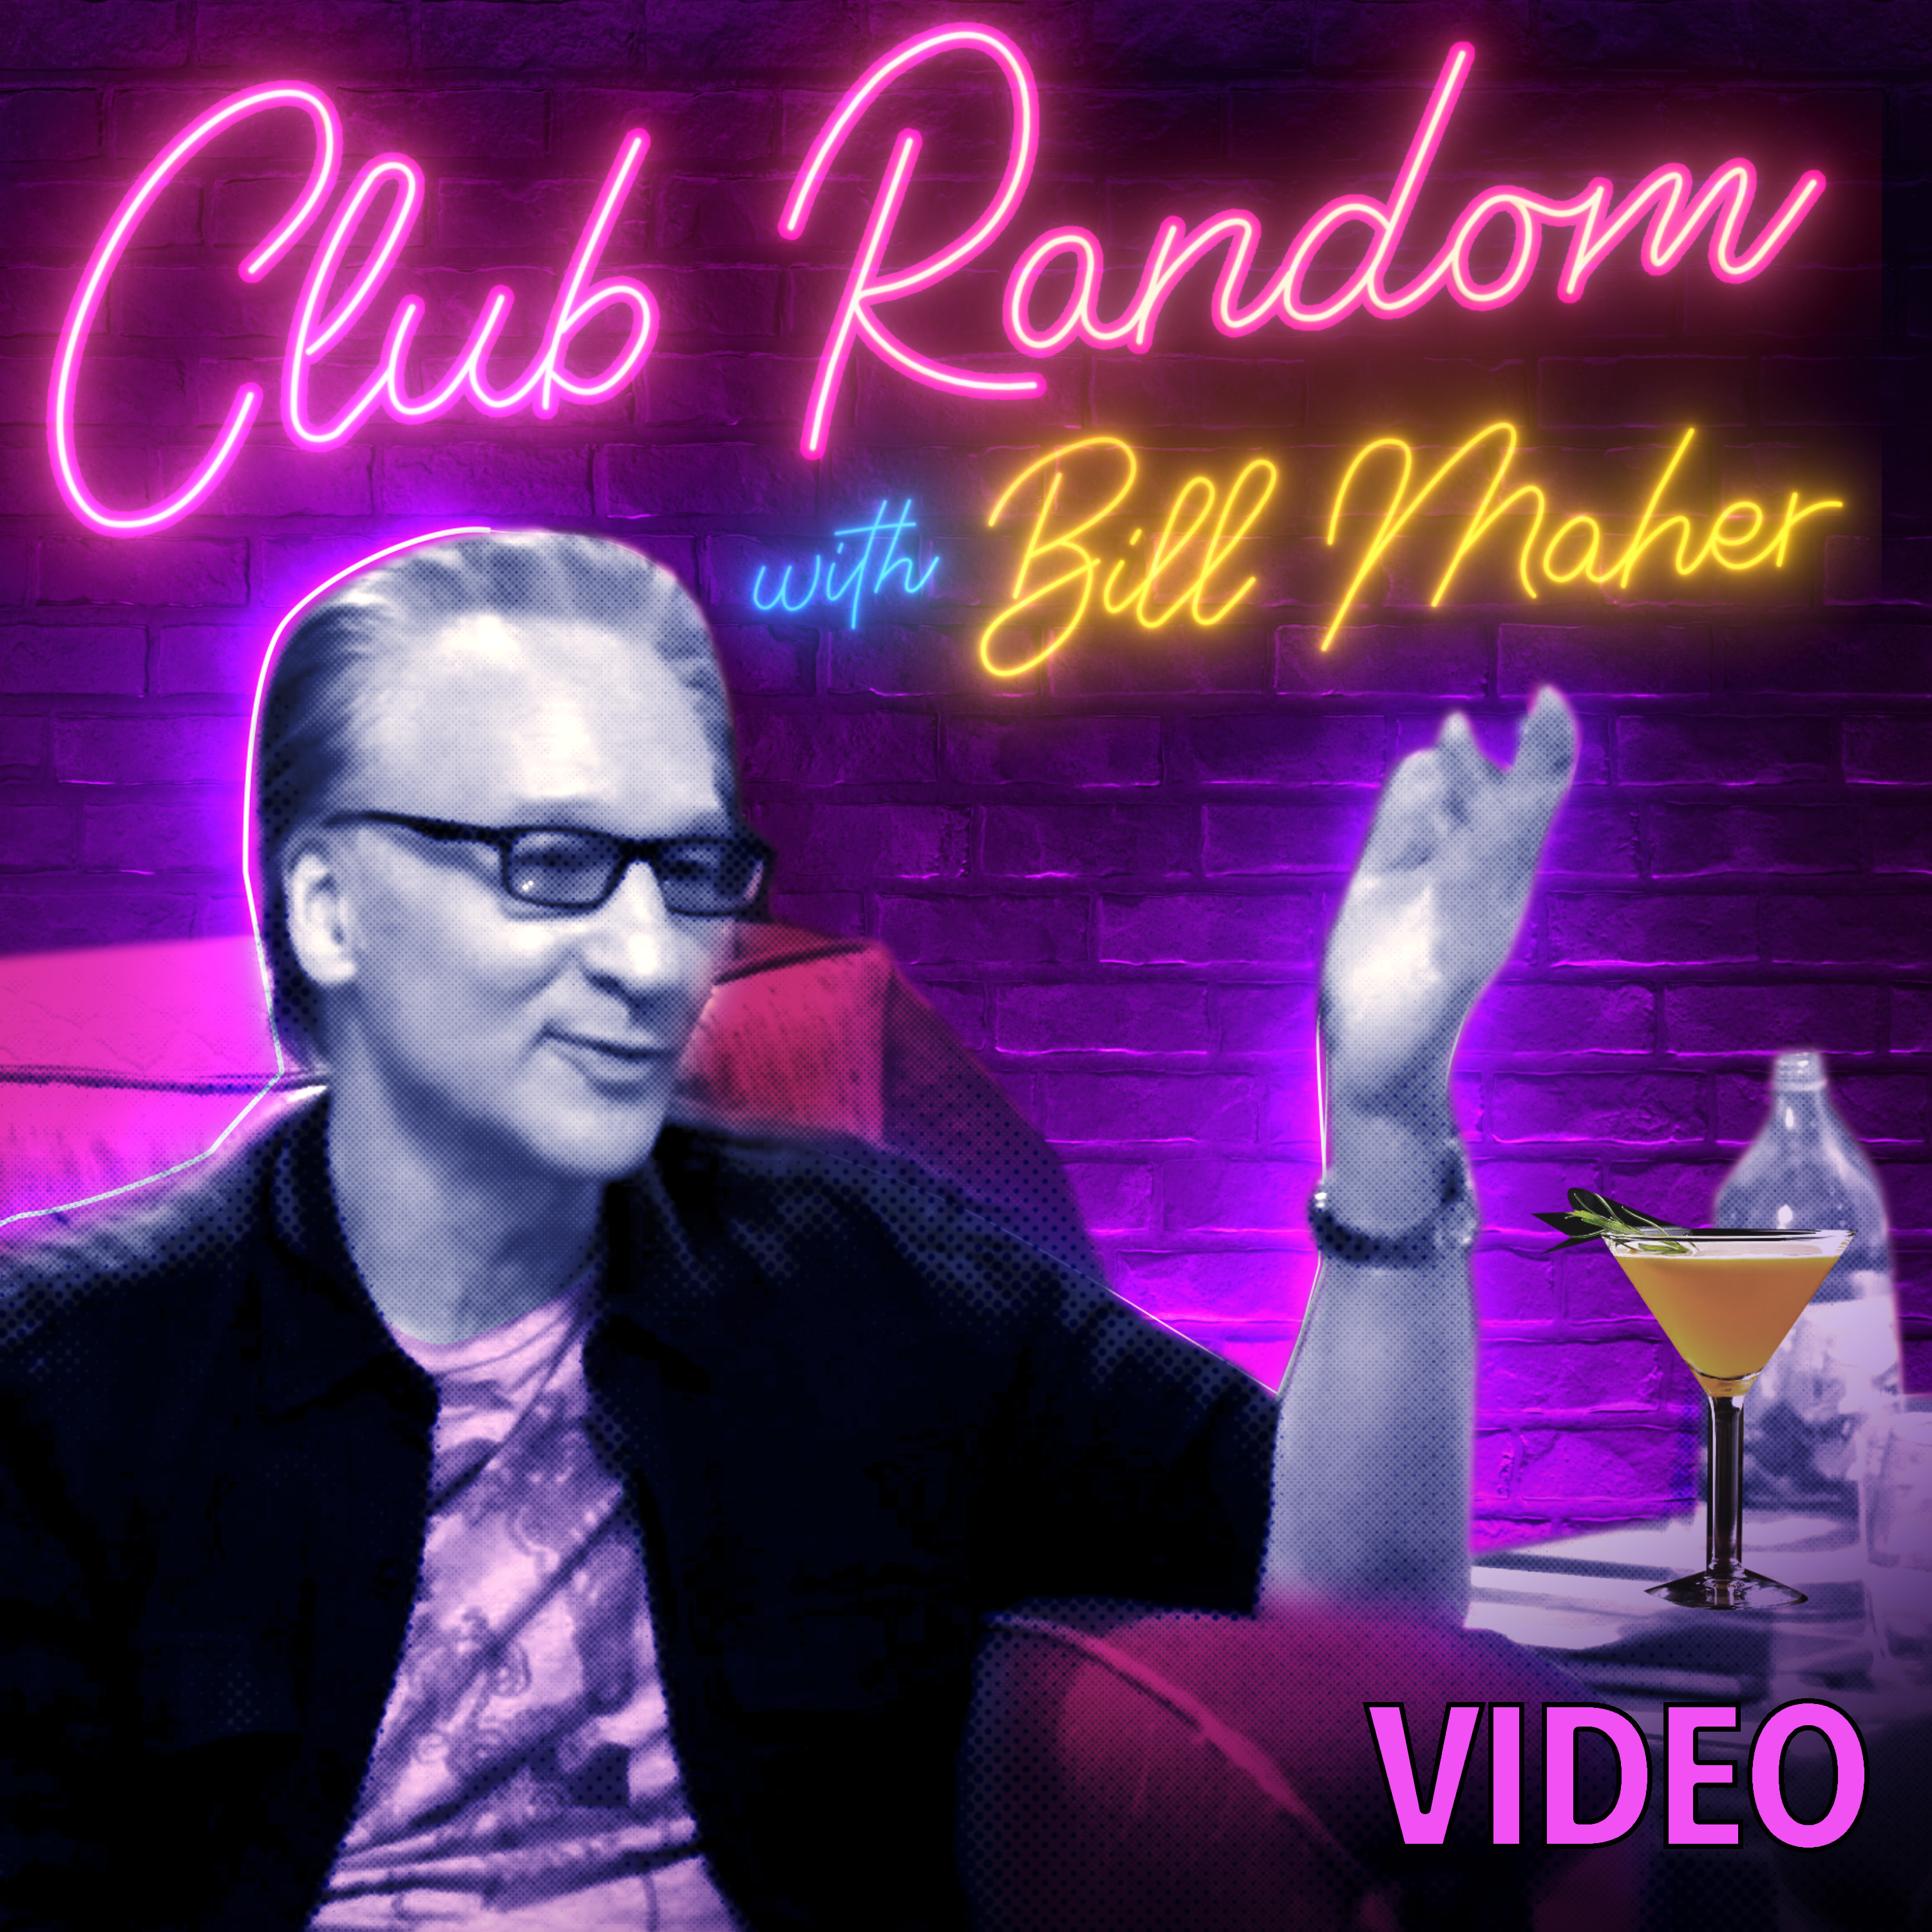 Video: Kenny G | Club Random with Bill Maher